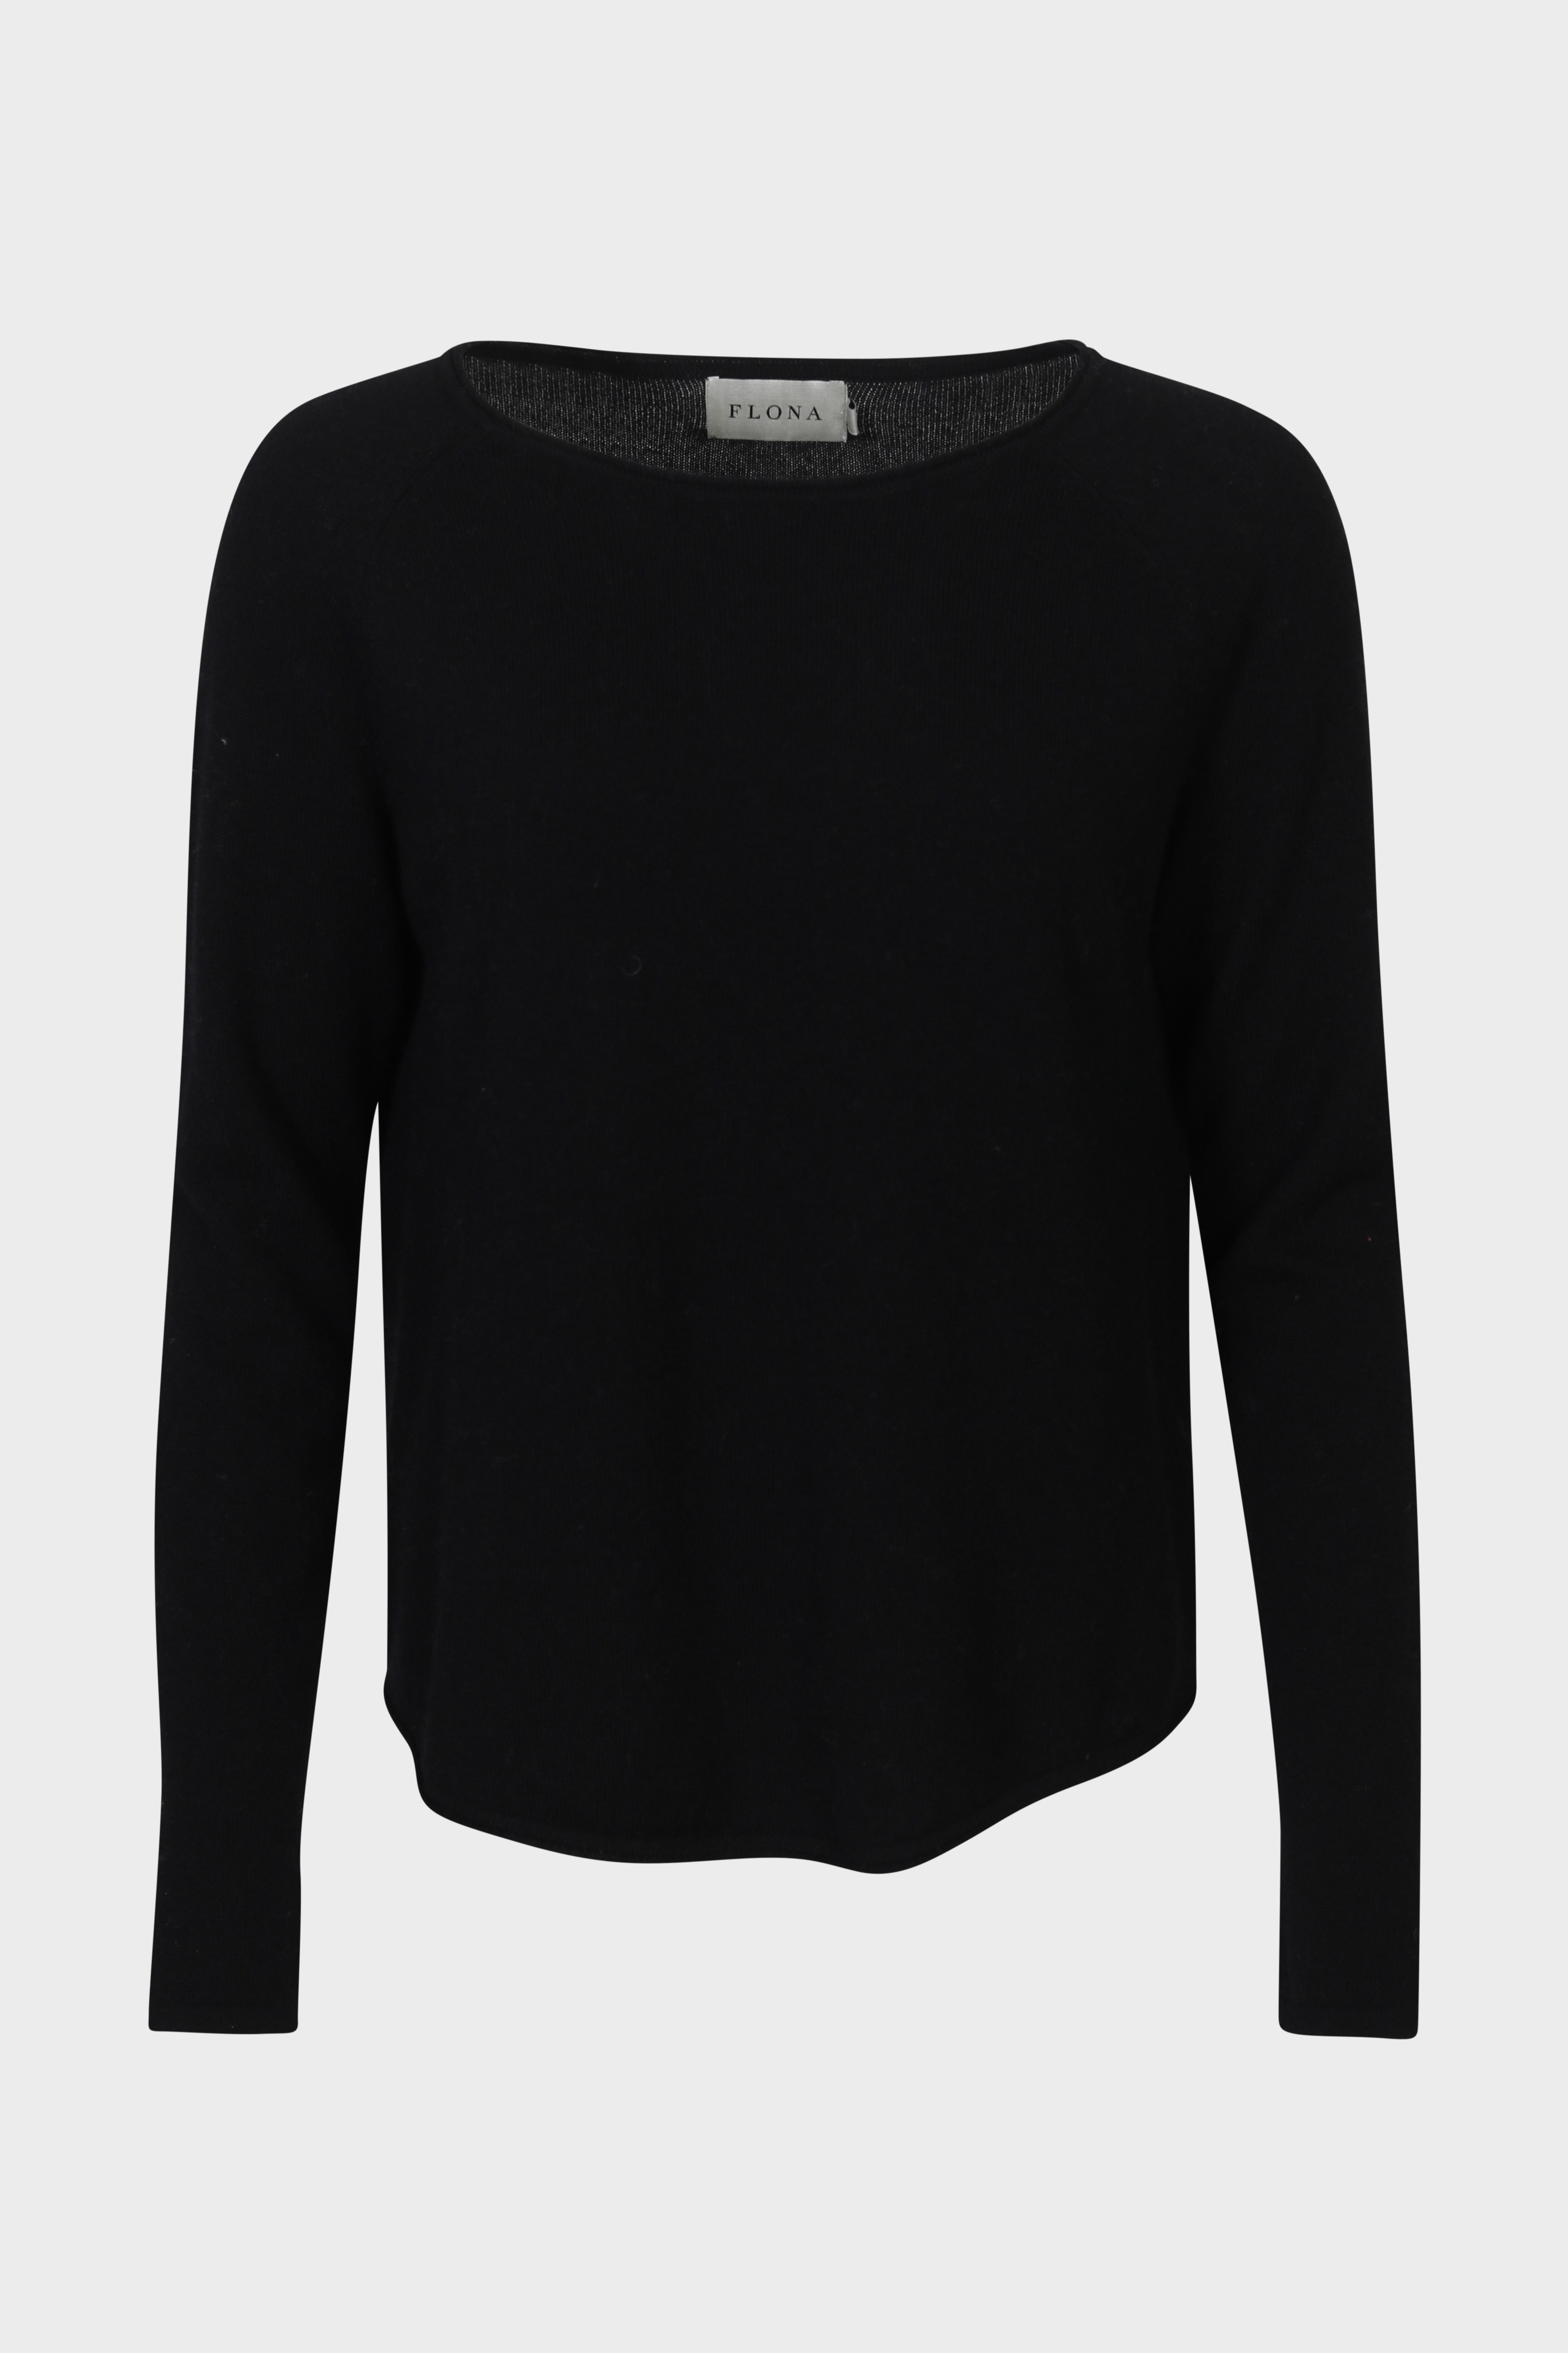 FLONA Cashmere Sweater in Black XL